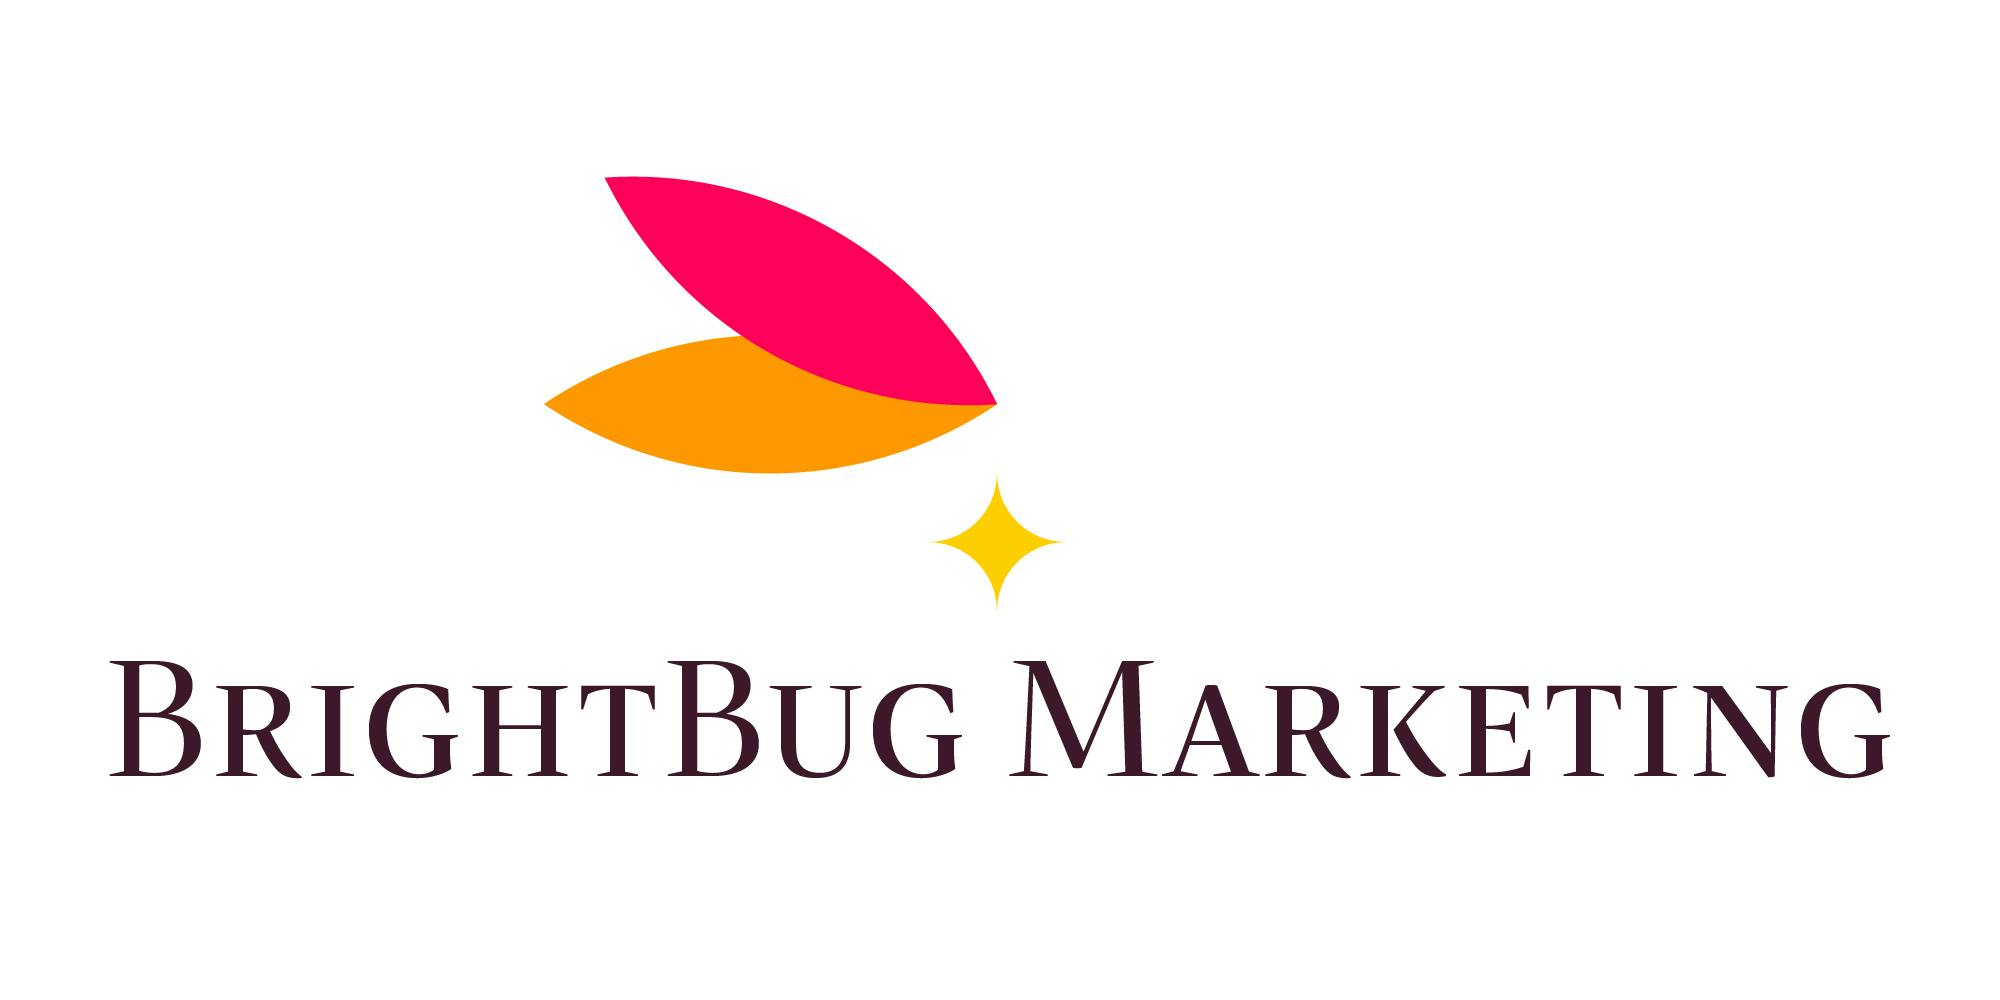 Cover Image for BrightBug Marketing Rebrand and Website Revamp